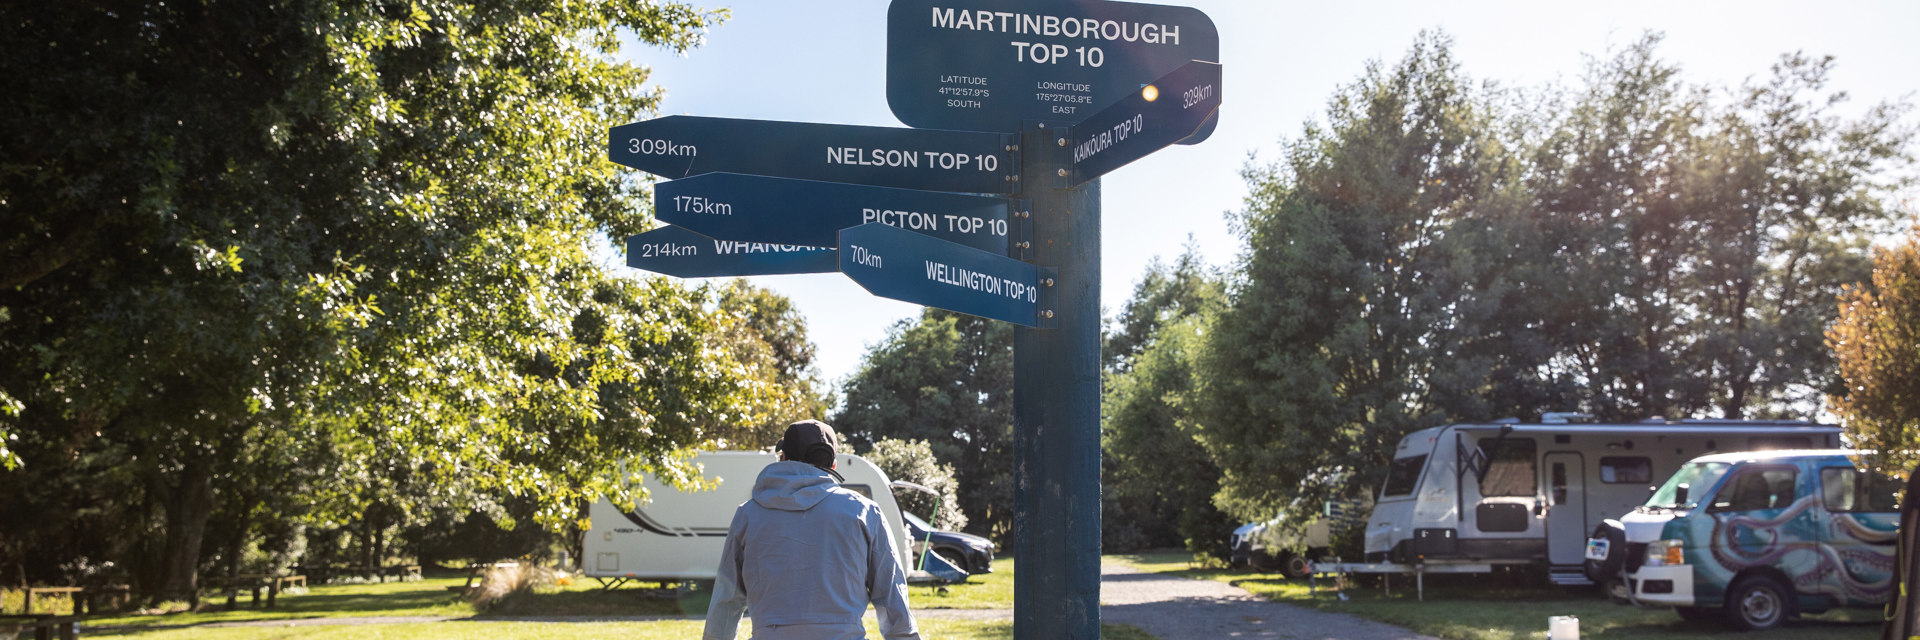 Martinborough TOP 10 Holiday Park